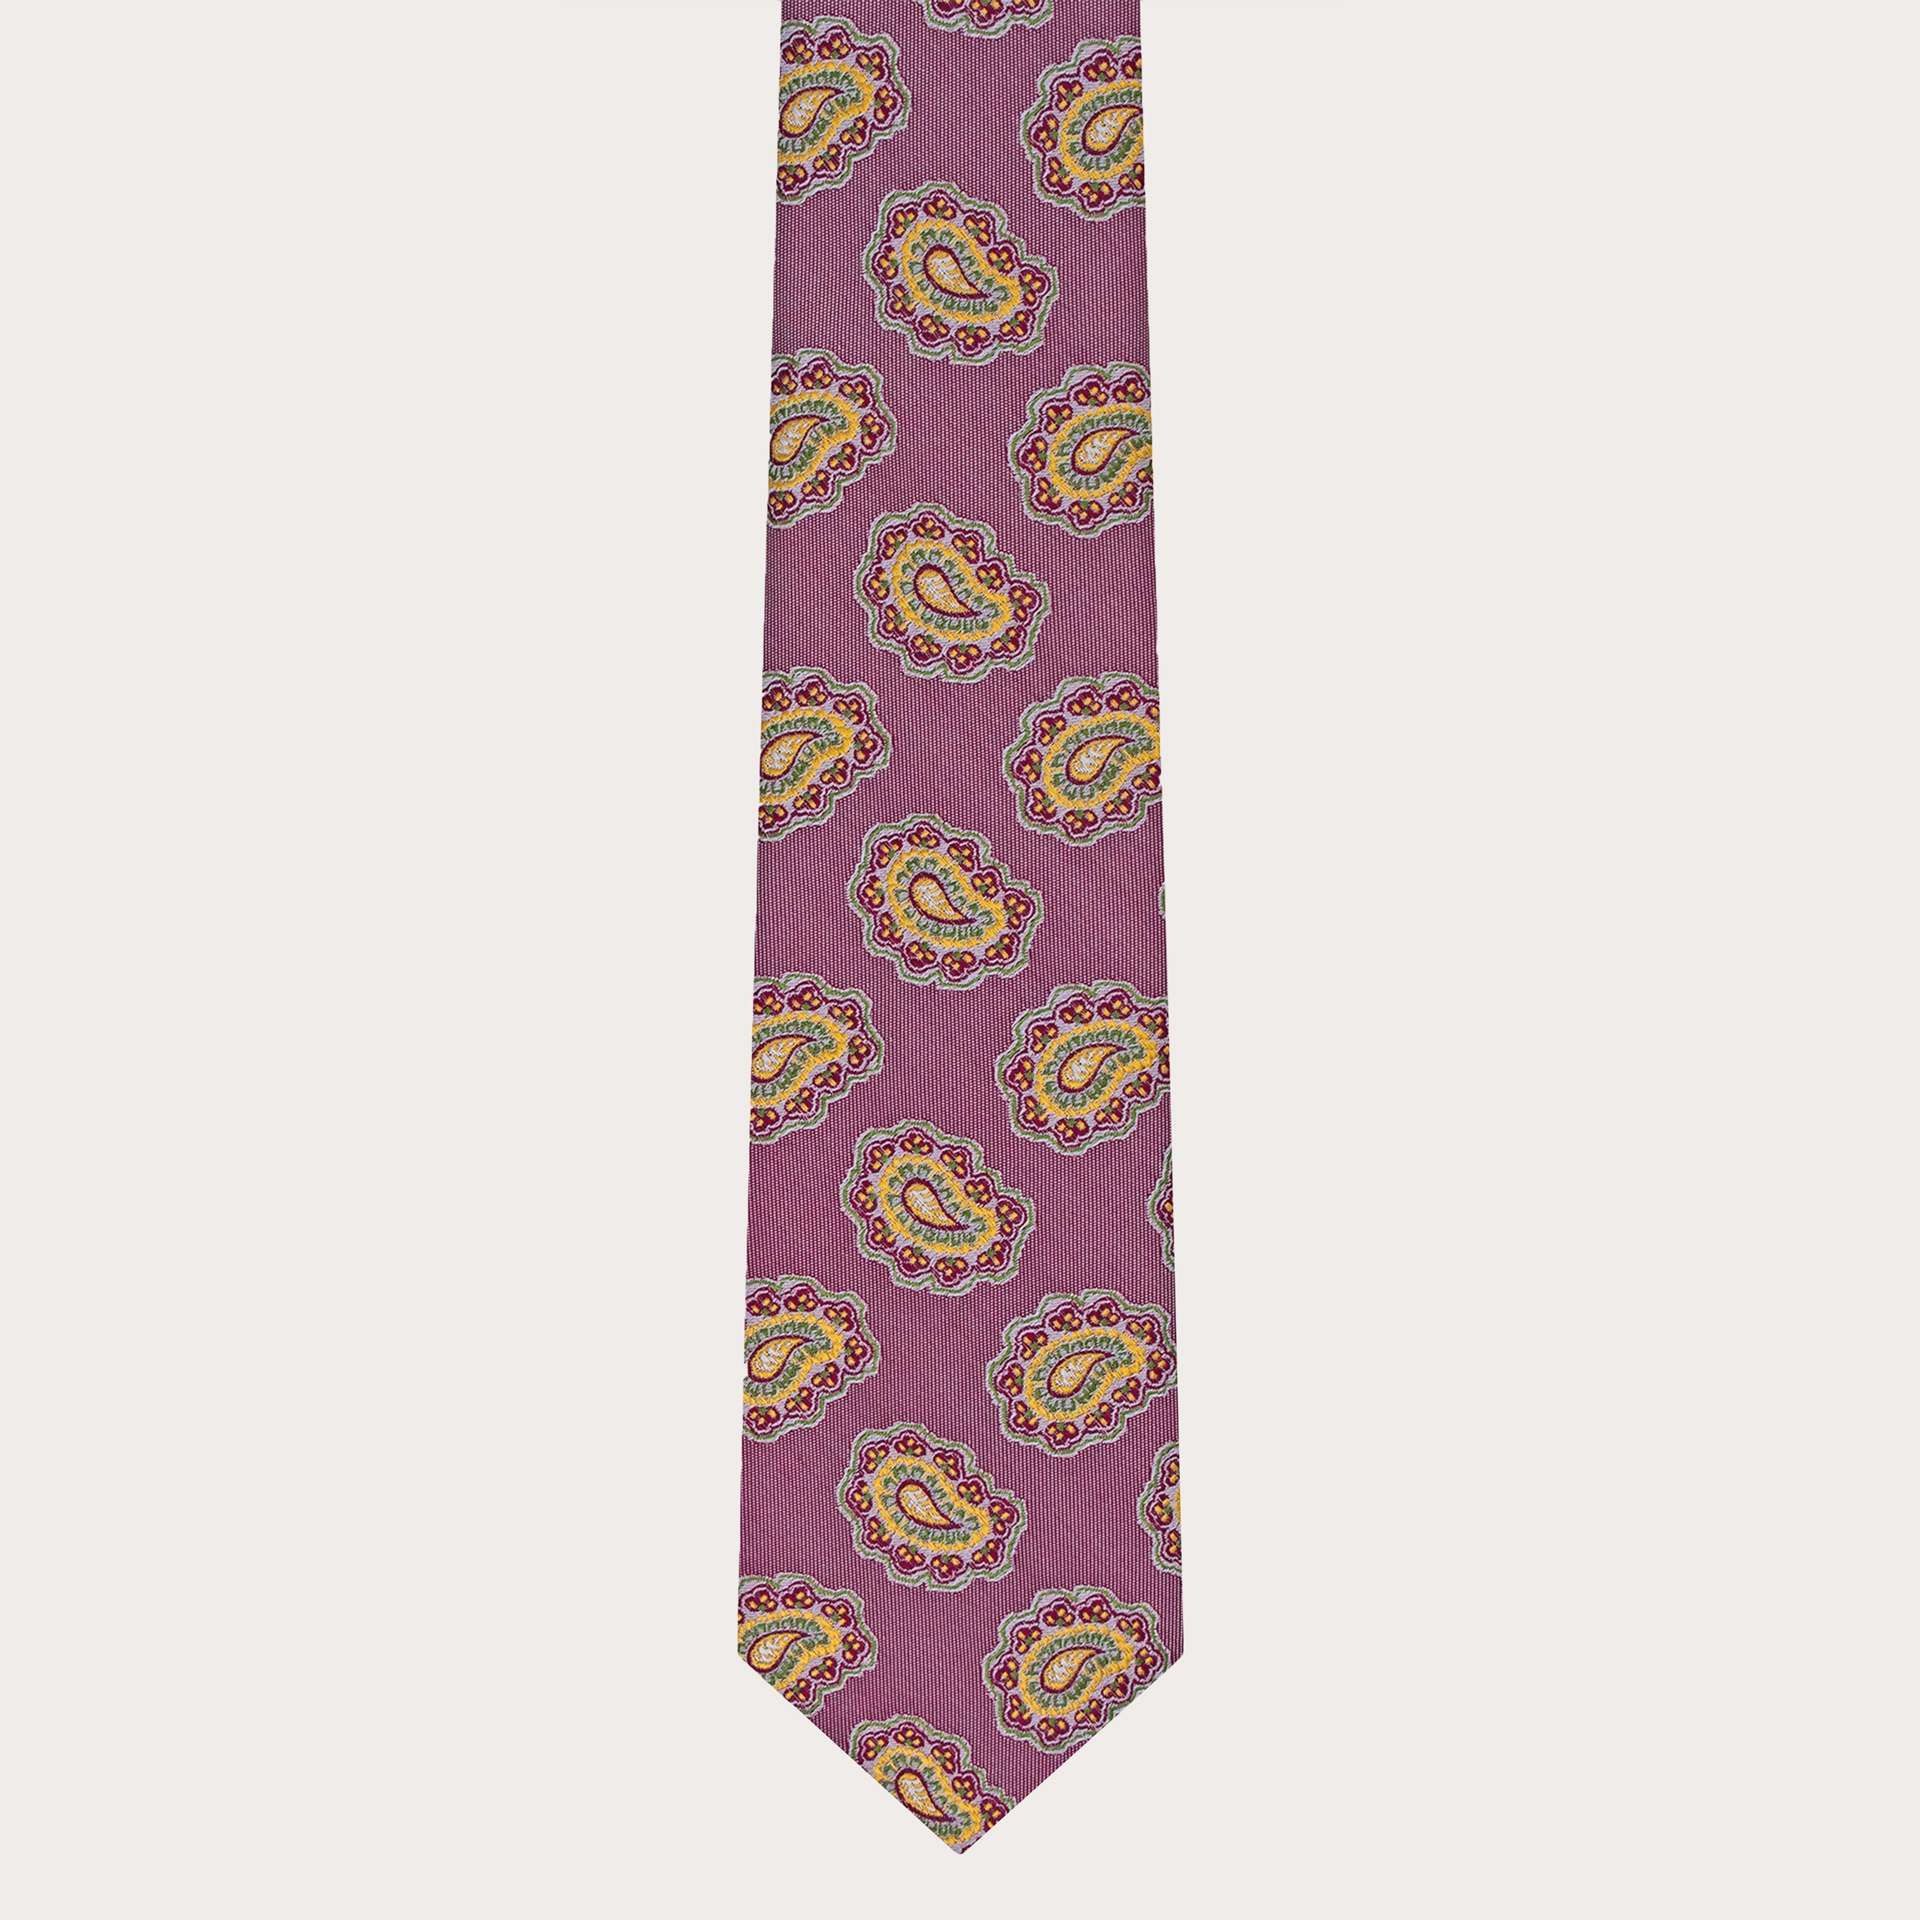 Silk necktie, bordeaux, macro paisley pattern